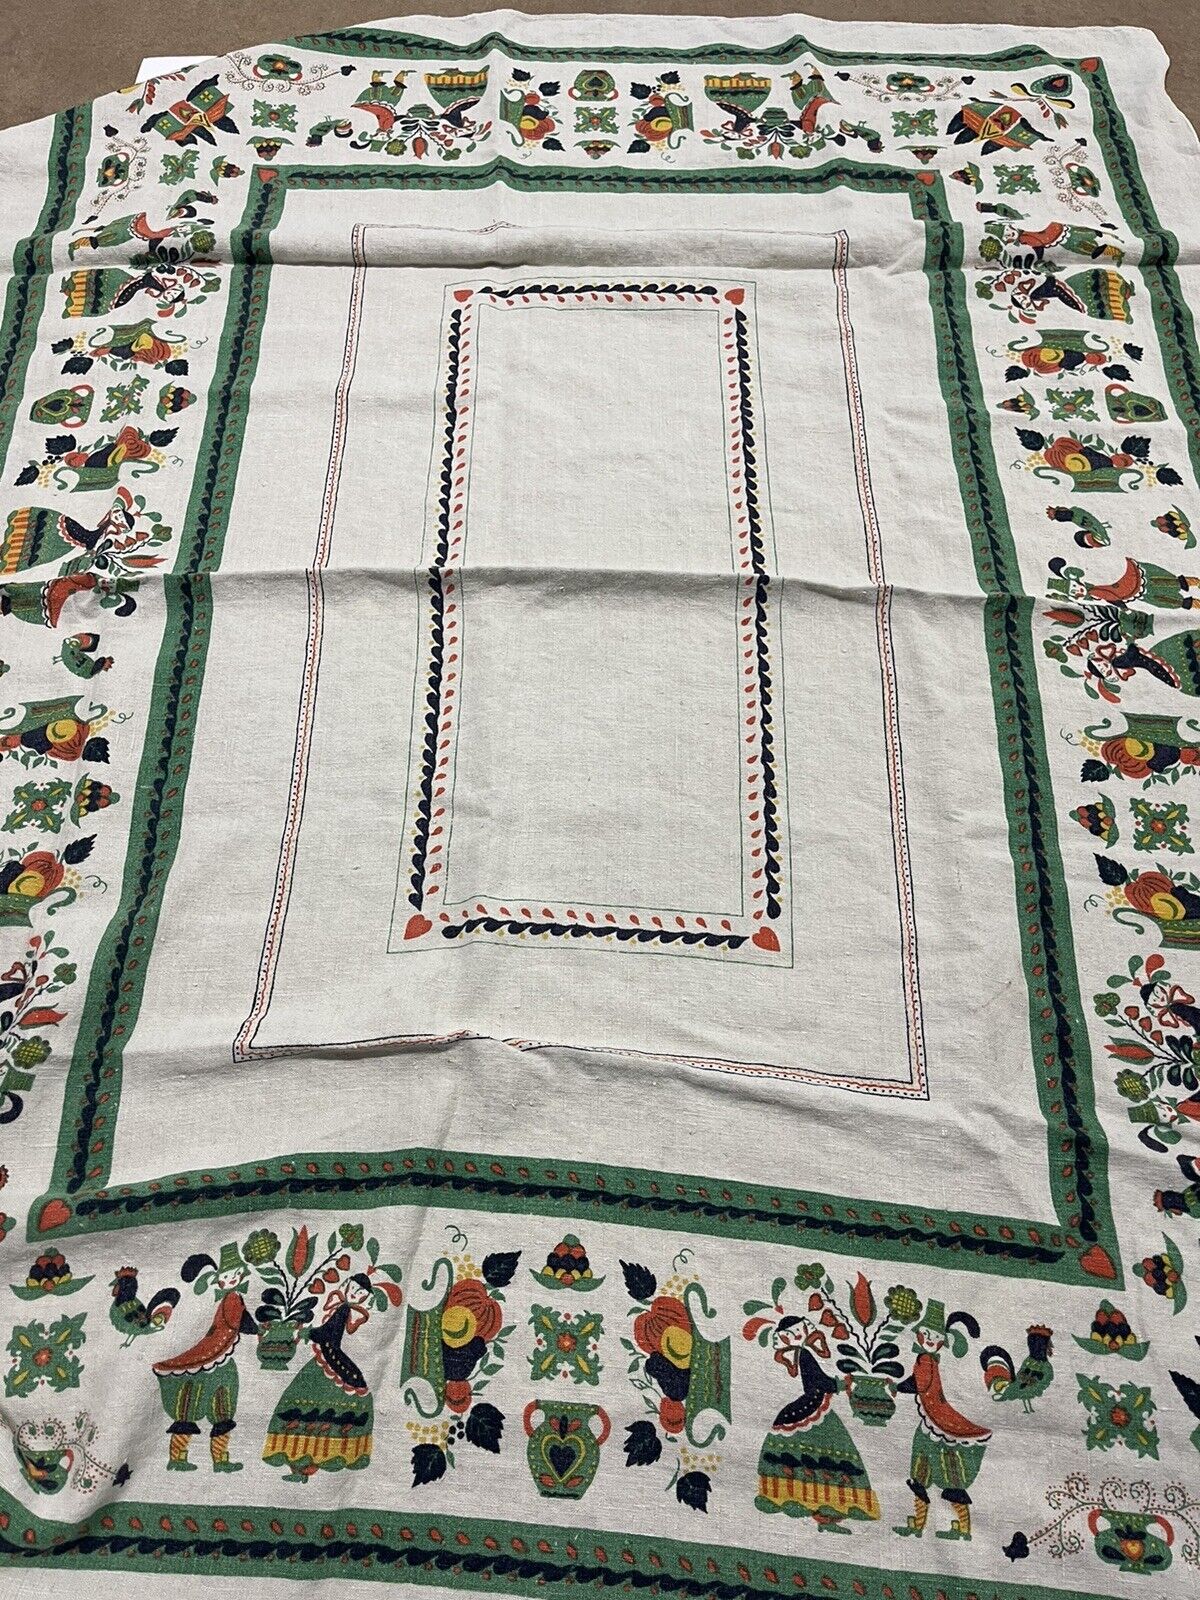 Vintage Parisian Prints Linen Tablecloth 57x46 Pennsylvania Dutch